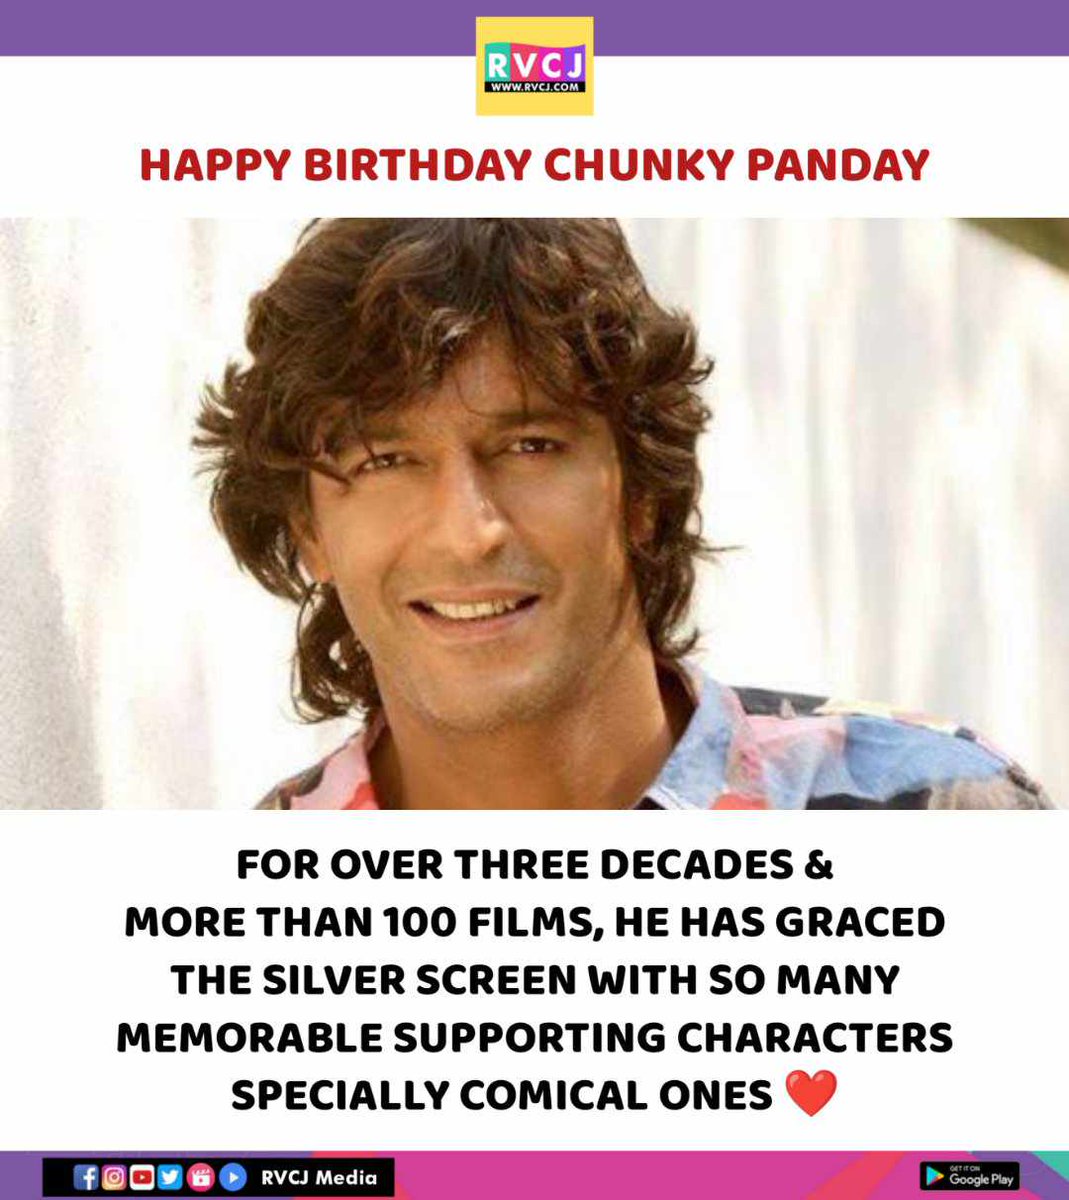 Happy Birthday Chunky Panday

#chunkypanday #rvcjinsta #rvcjmovies @ChunkyThePanday